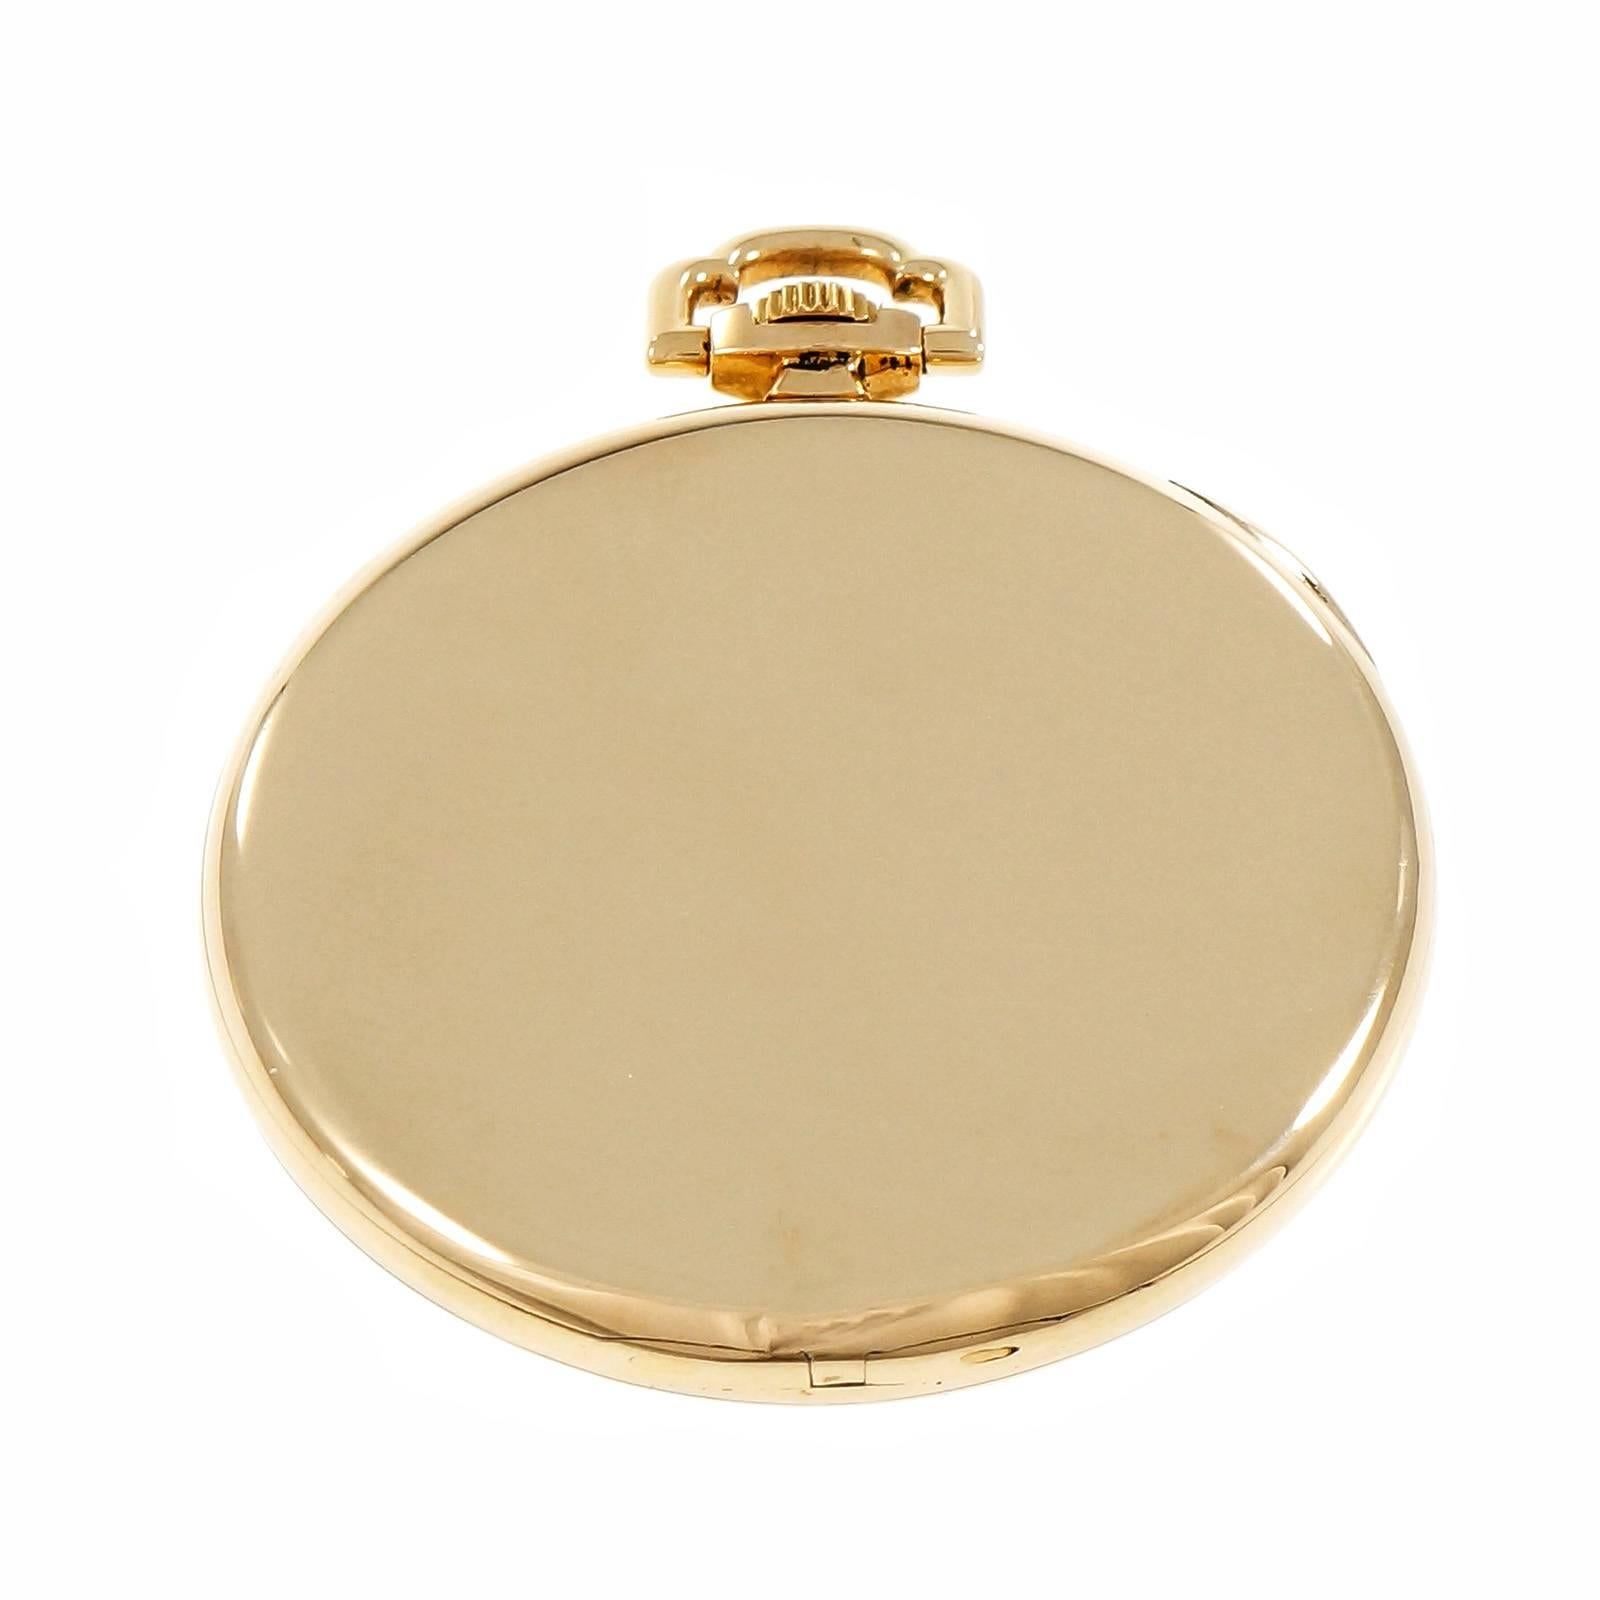 Men's Tiffany & Co. Manual Wind yellow gold Open Face Pocket Watch